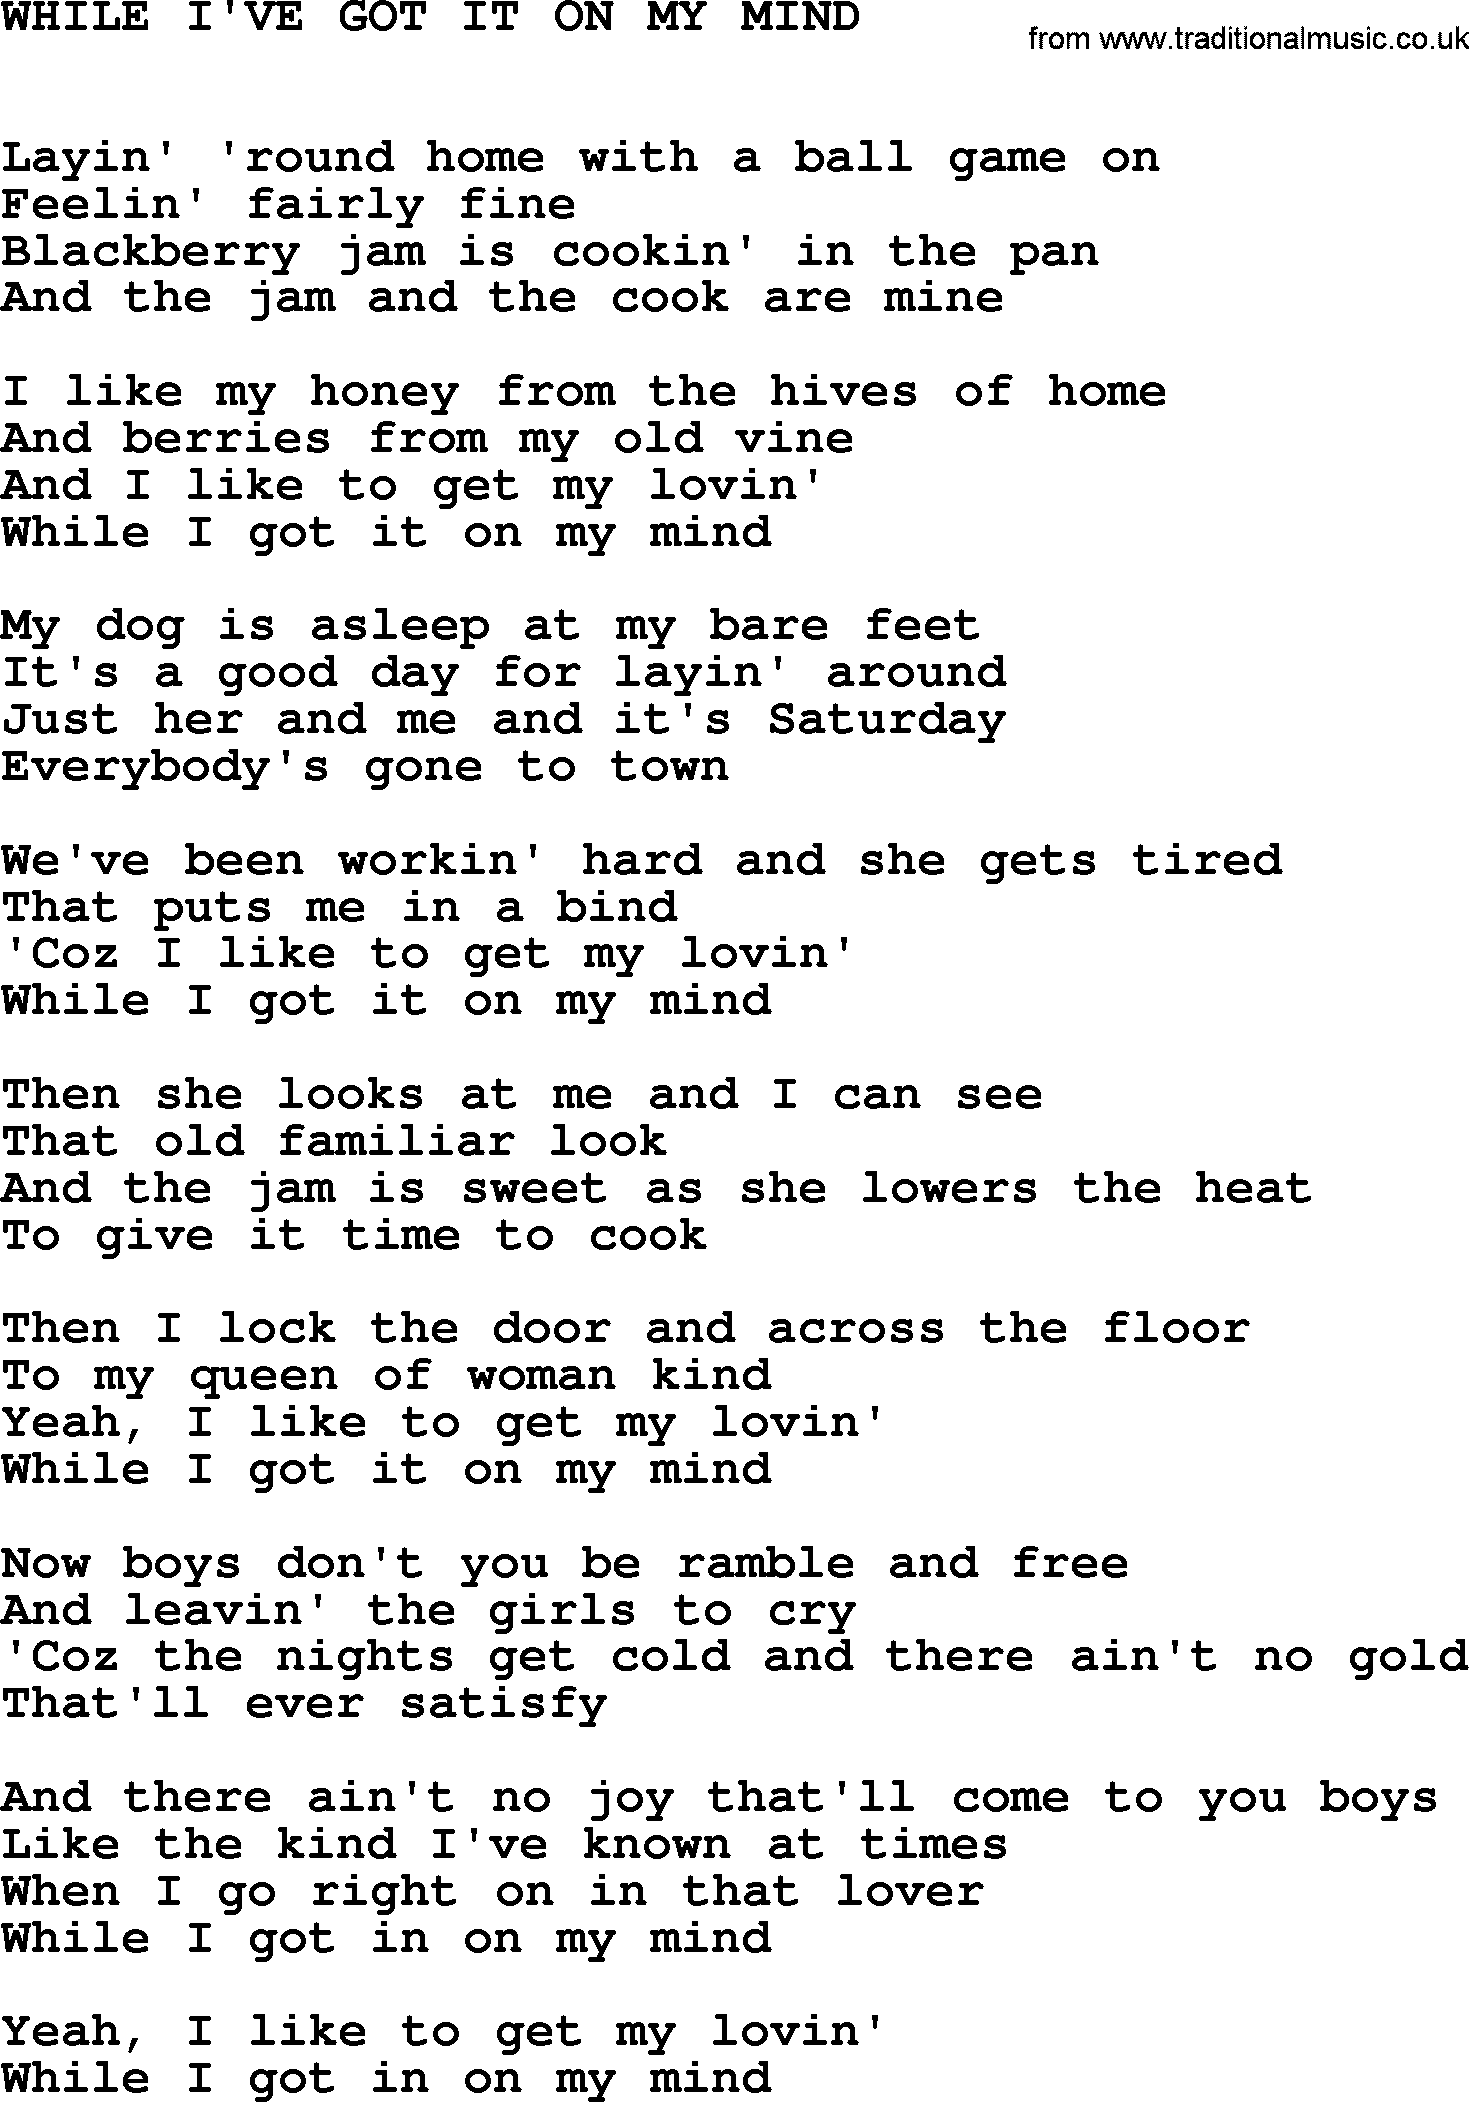 Johnny Cash song While I've Got It On My Mind.txt lyrics